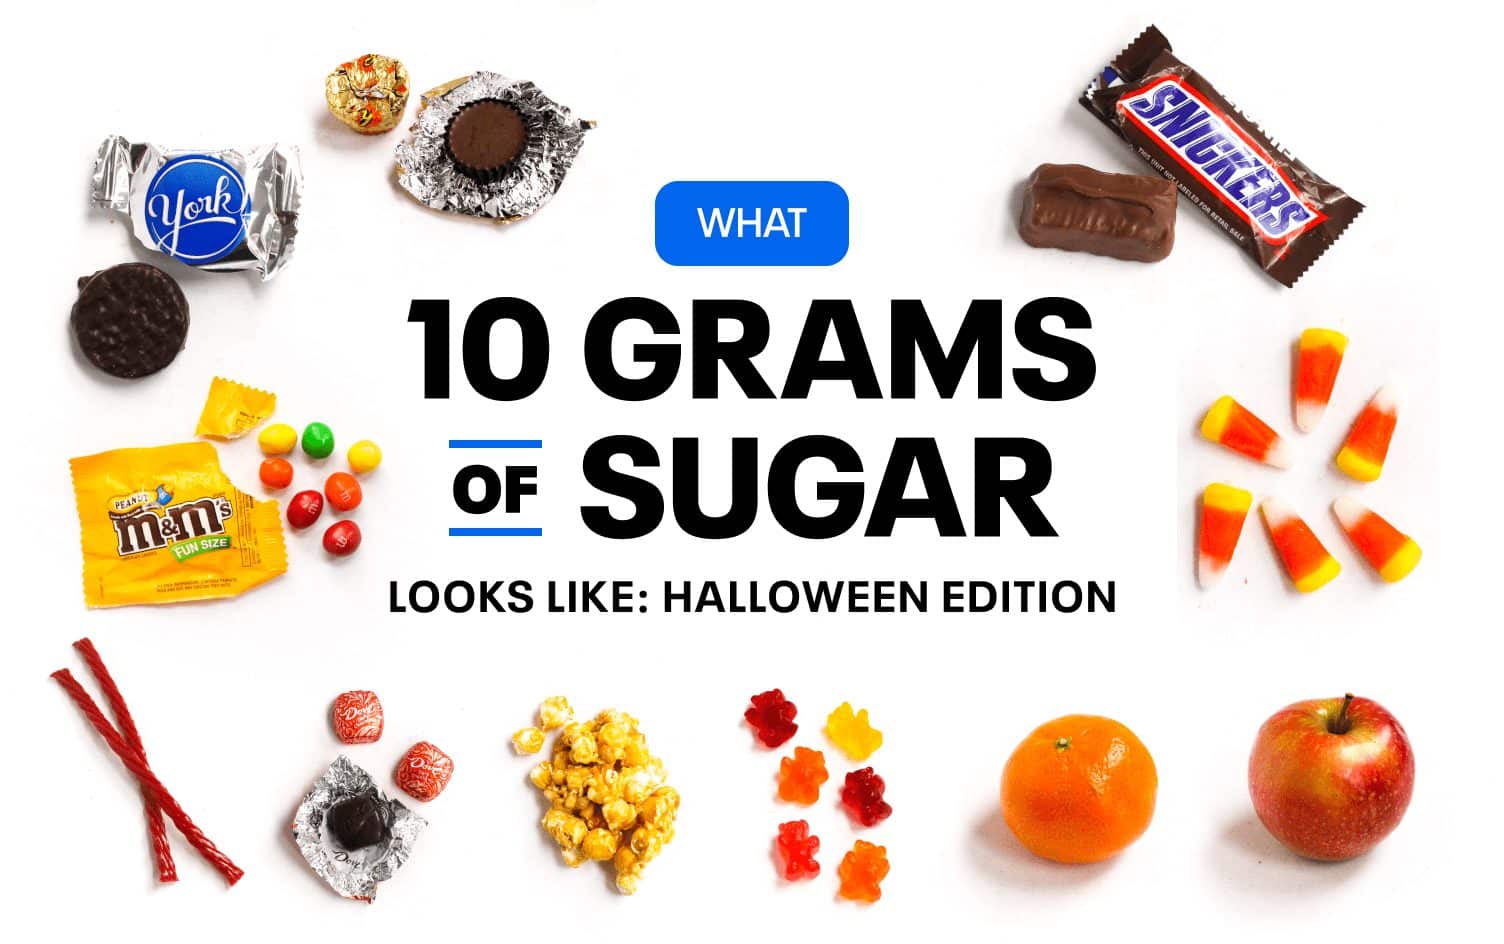 What 10 Grams of Sugar Looks Like [Halloween Edition]